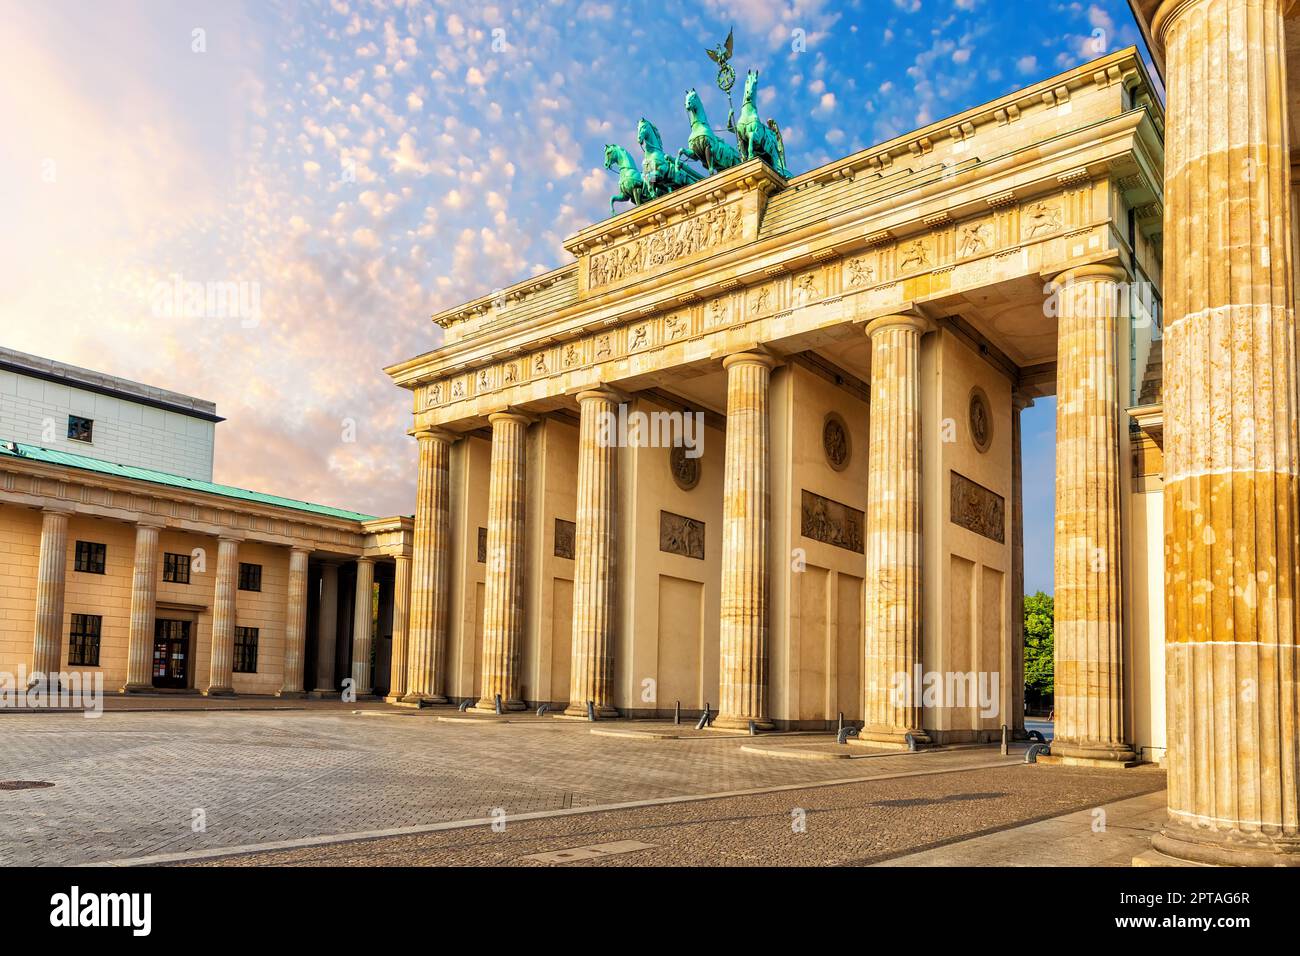 Famosa porta di Brandeburgo o Brandenburger Tor, vista laterale, Berlino, Germania. Foto Stock